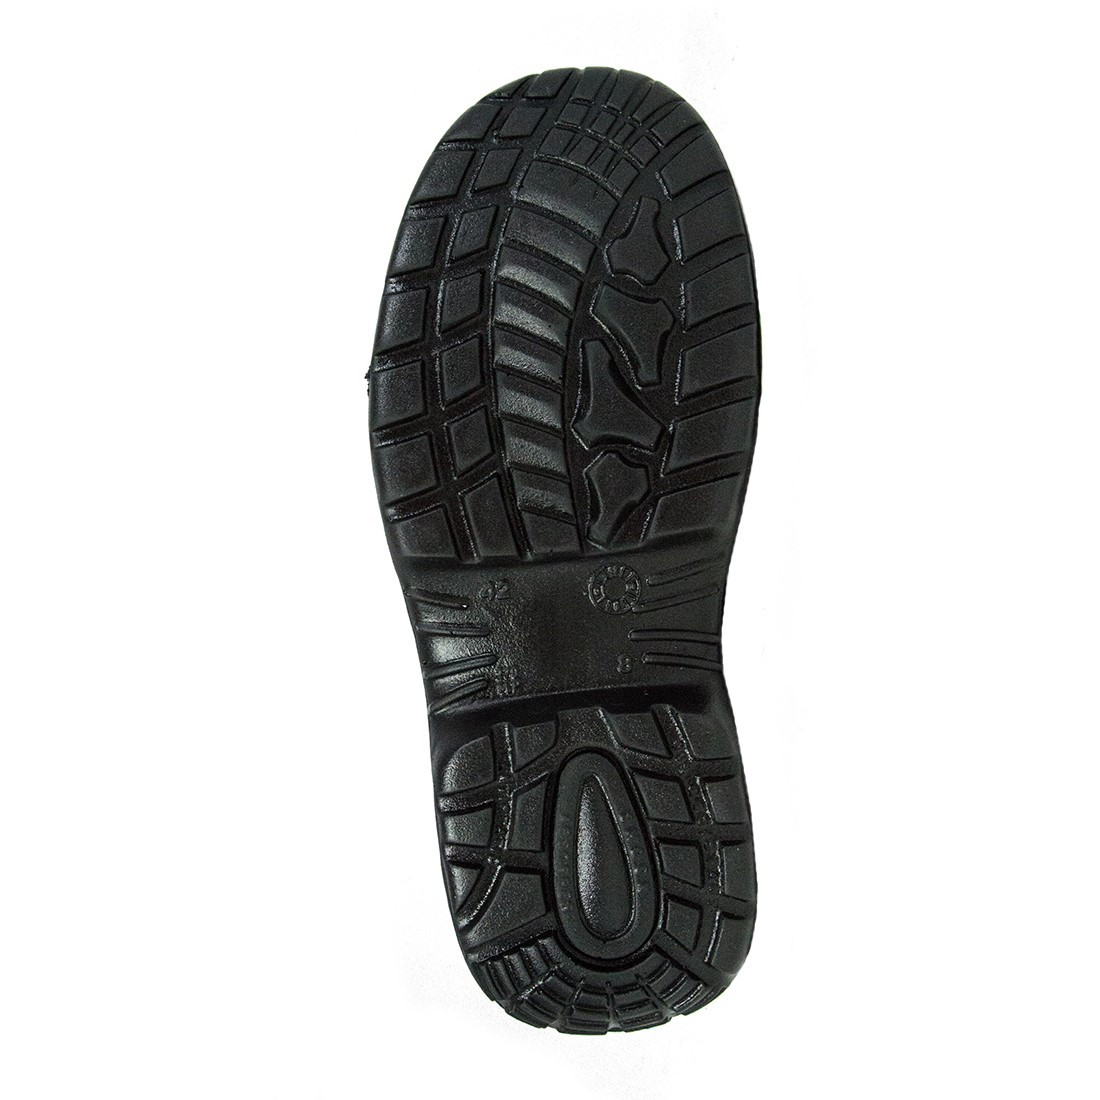 Pigalle Boot S3 SRC - Footwear